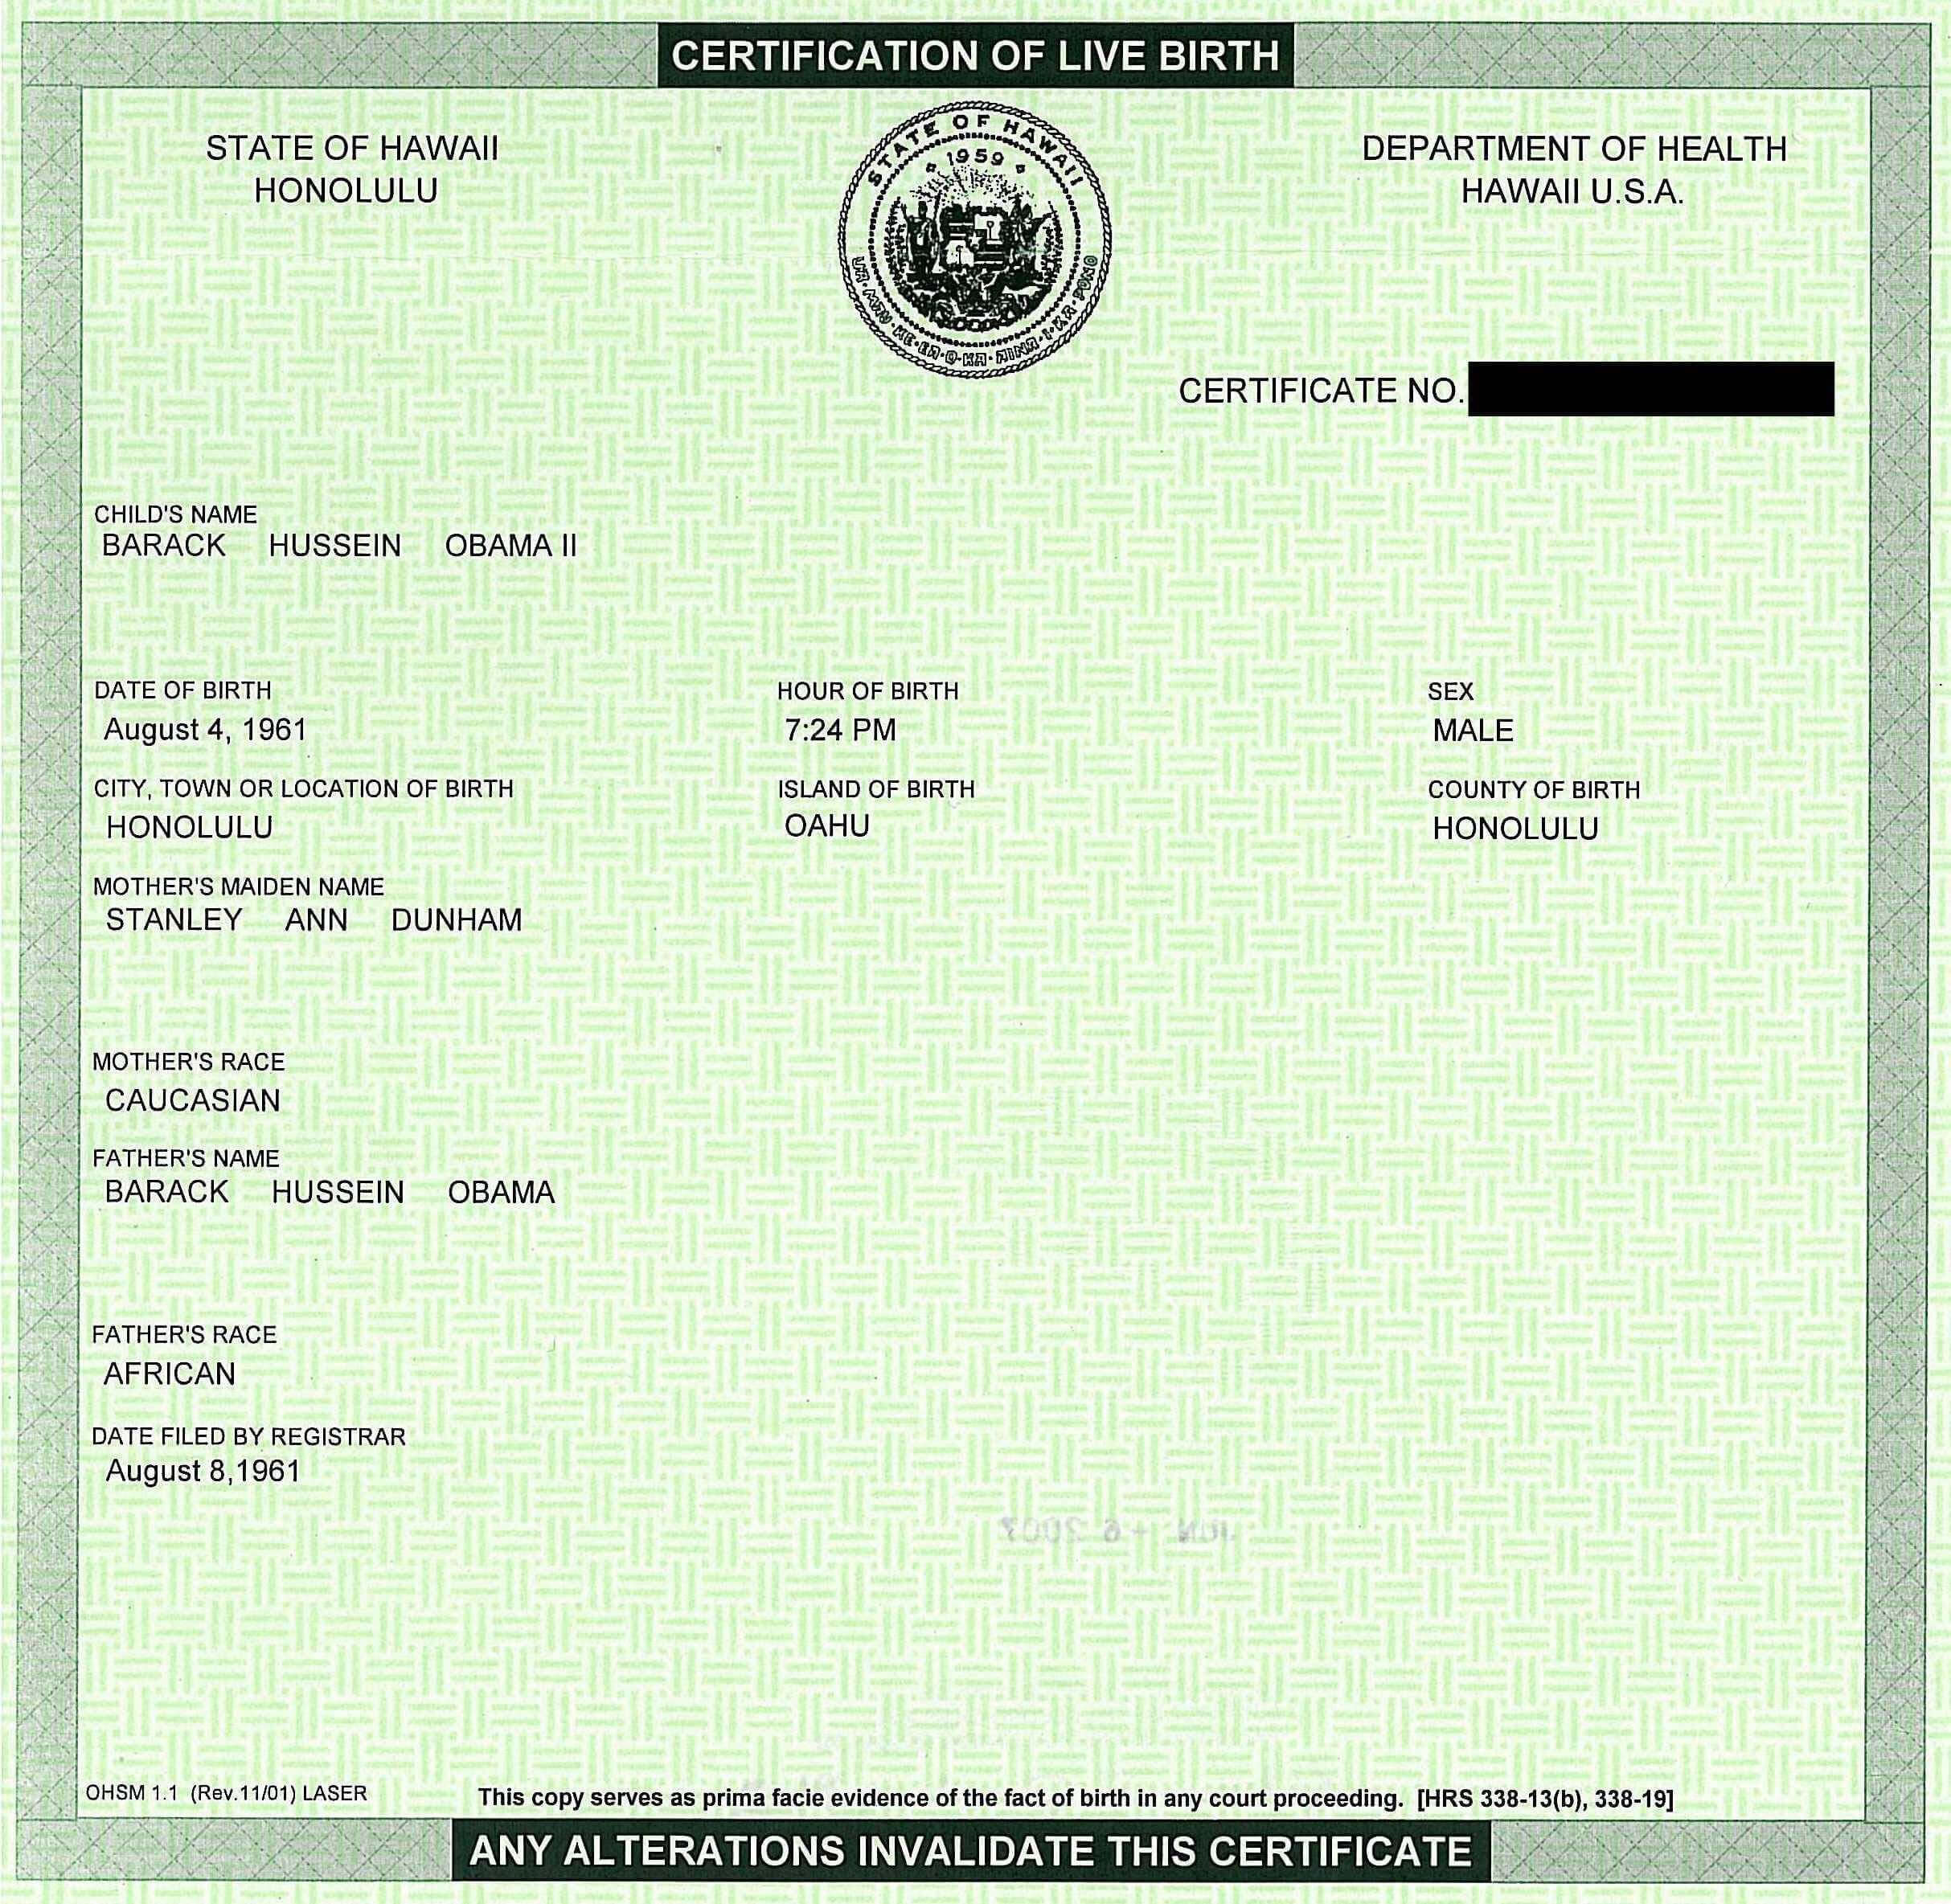 Fake Birth Certificate | Obama Birth Certificate, Birth Throughout Novelty Birth Certificate Template